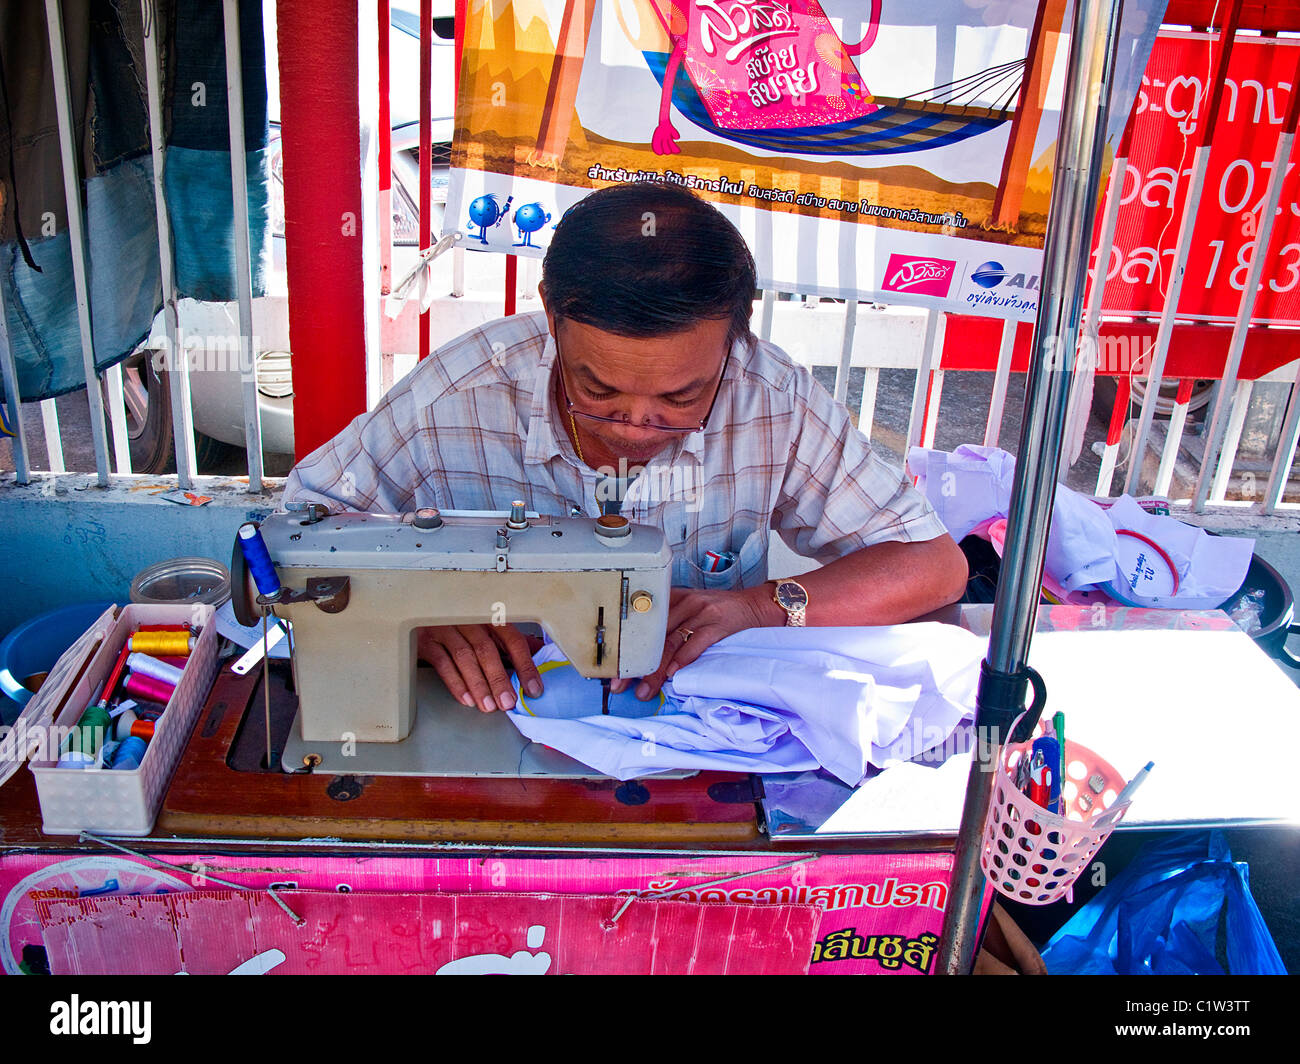 Thailand, Khon Kaen, Street tailor working at sewing machine Stock Photo